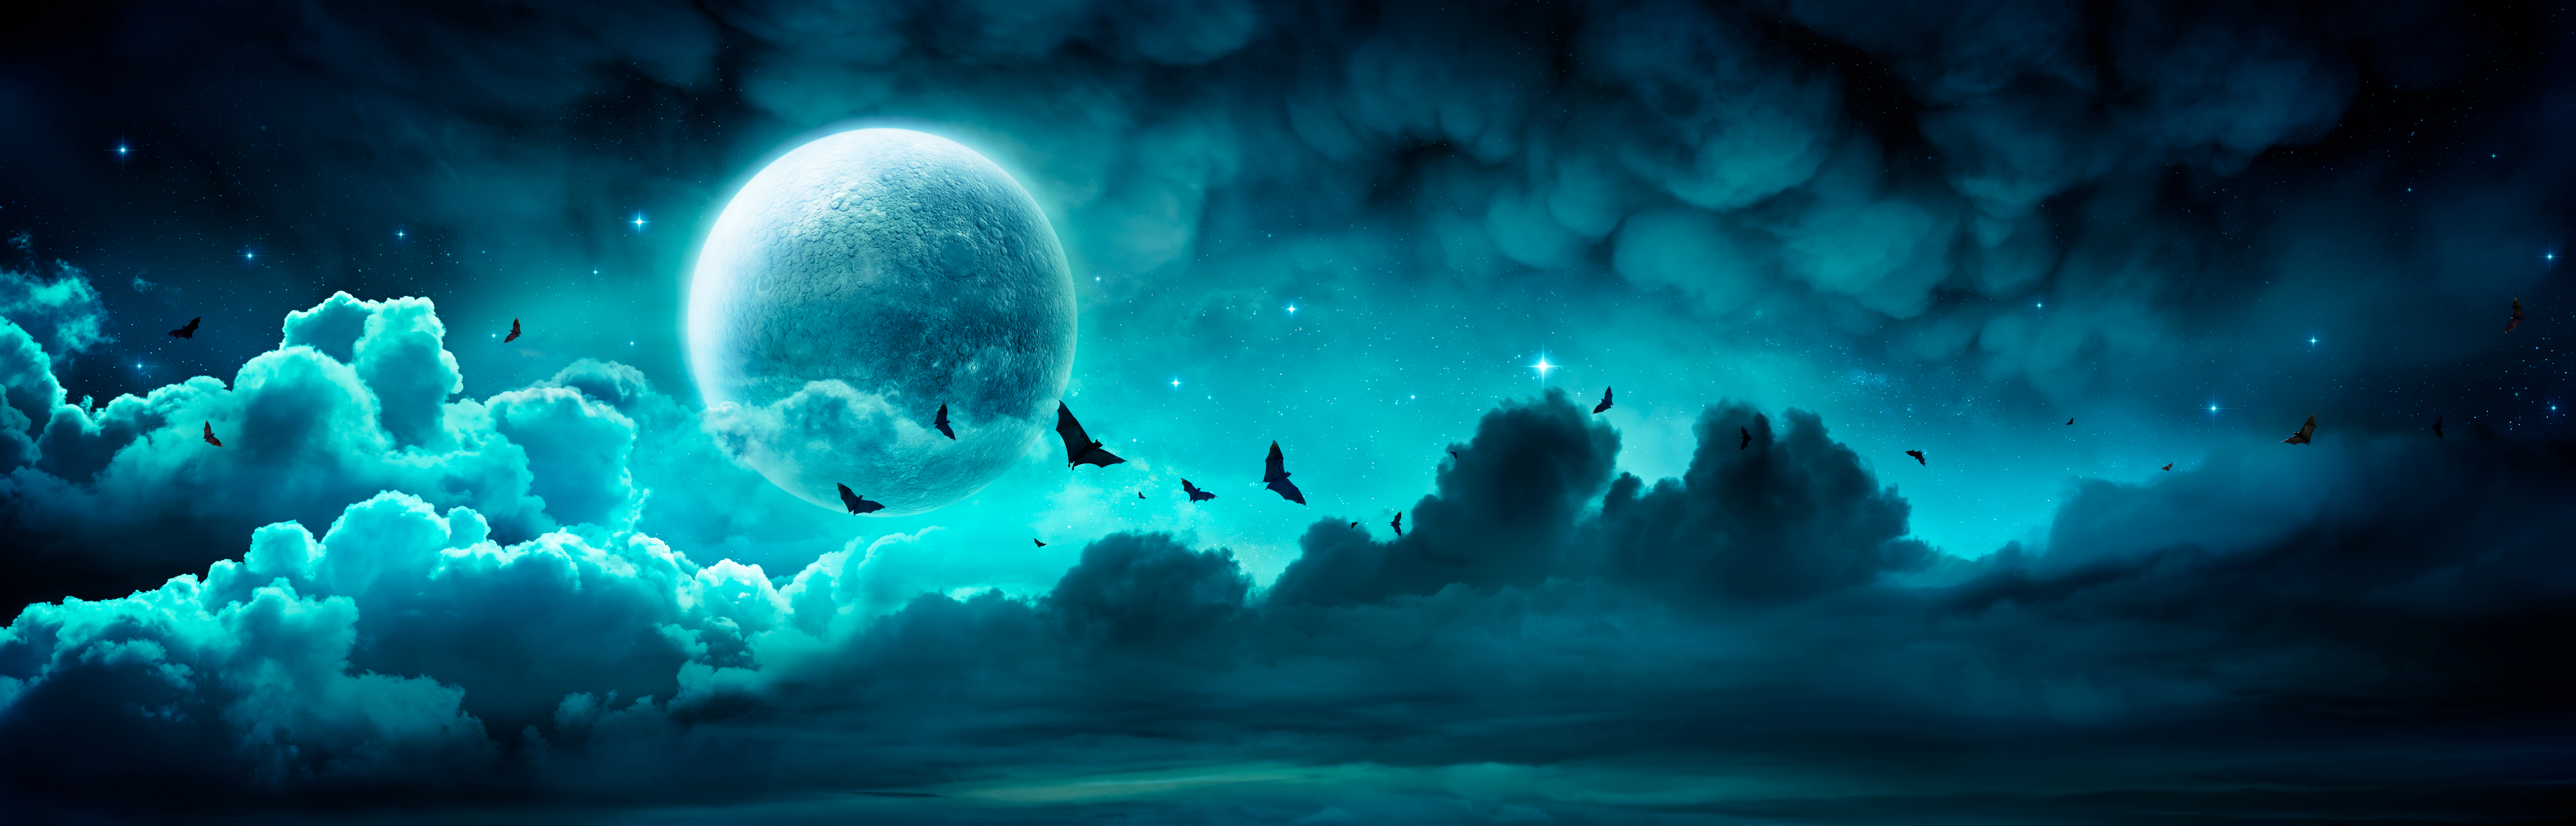 Halloween,Night,-,Spooky,Moon,In,Cloudy,Sky,With,Bats